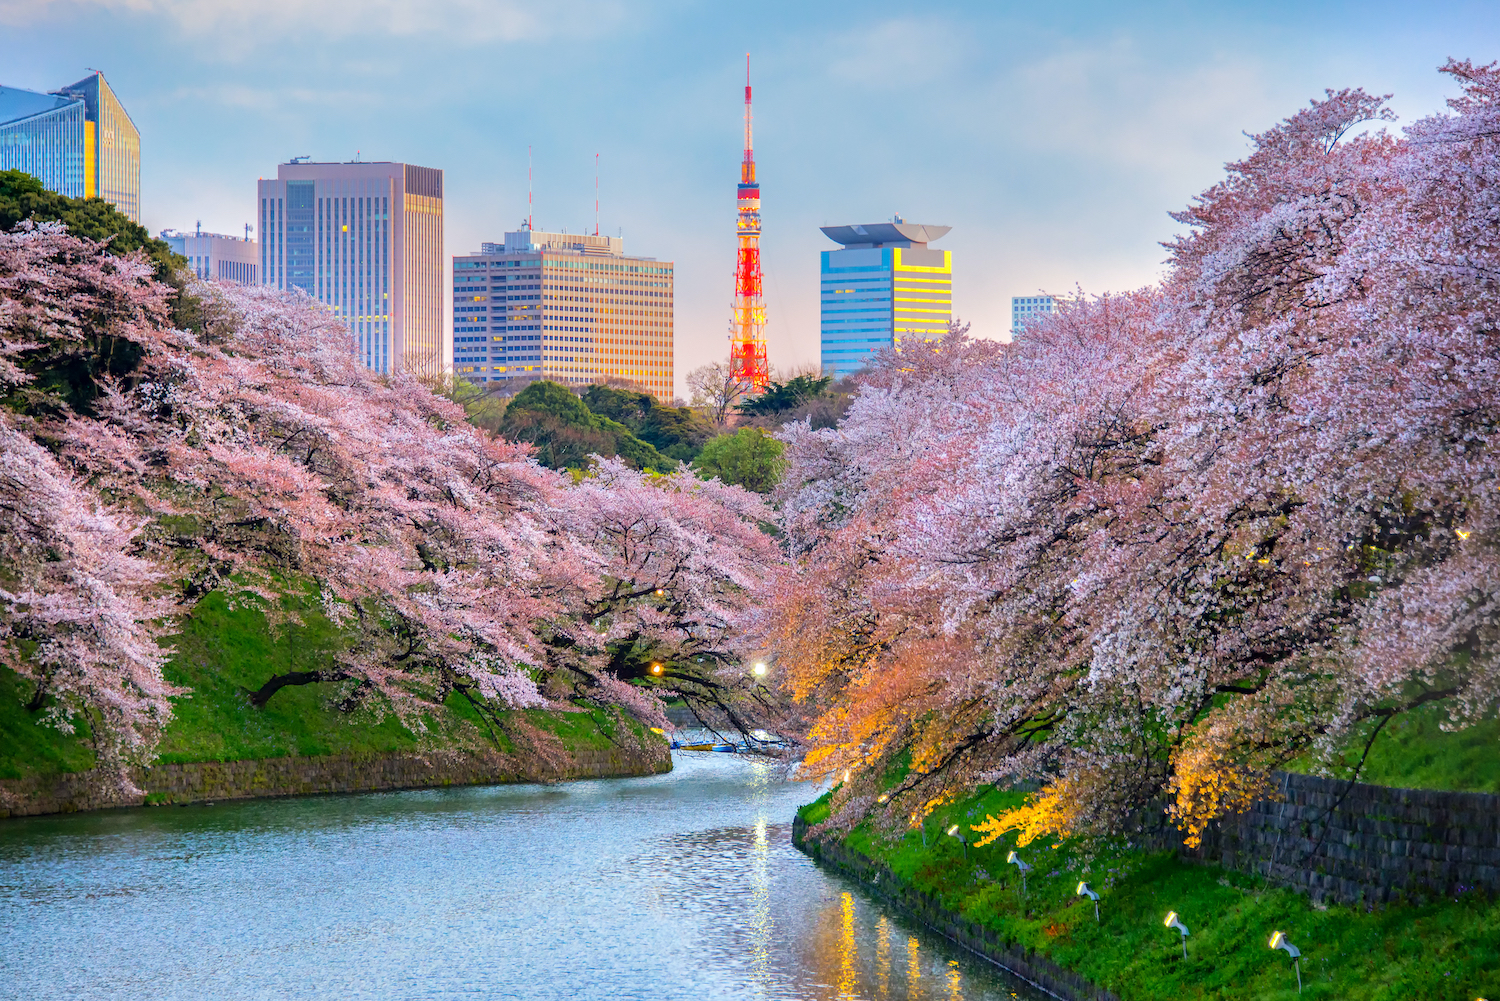 Chidorigafuchi park during the spring season this area is a popular sakura spot in Tokyo, Japan.